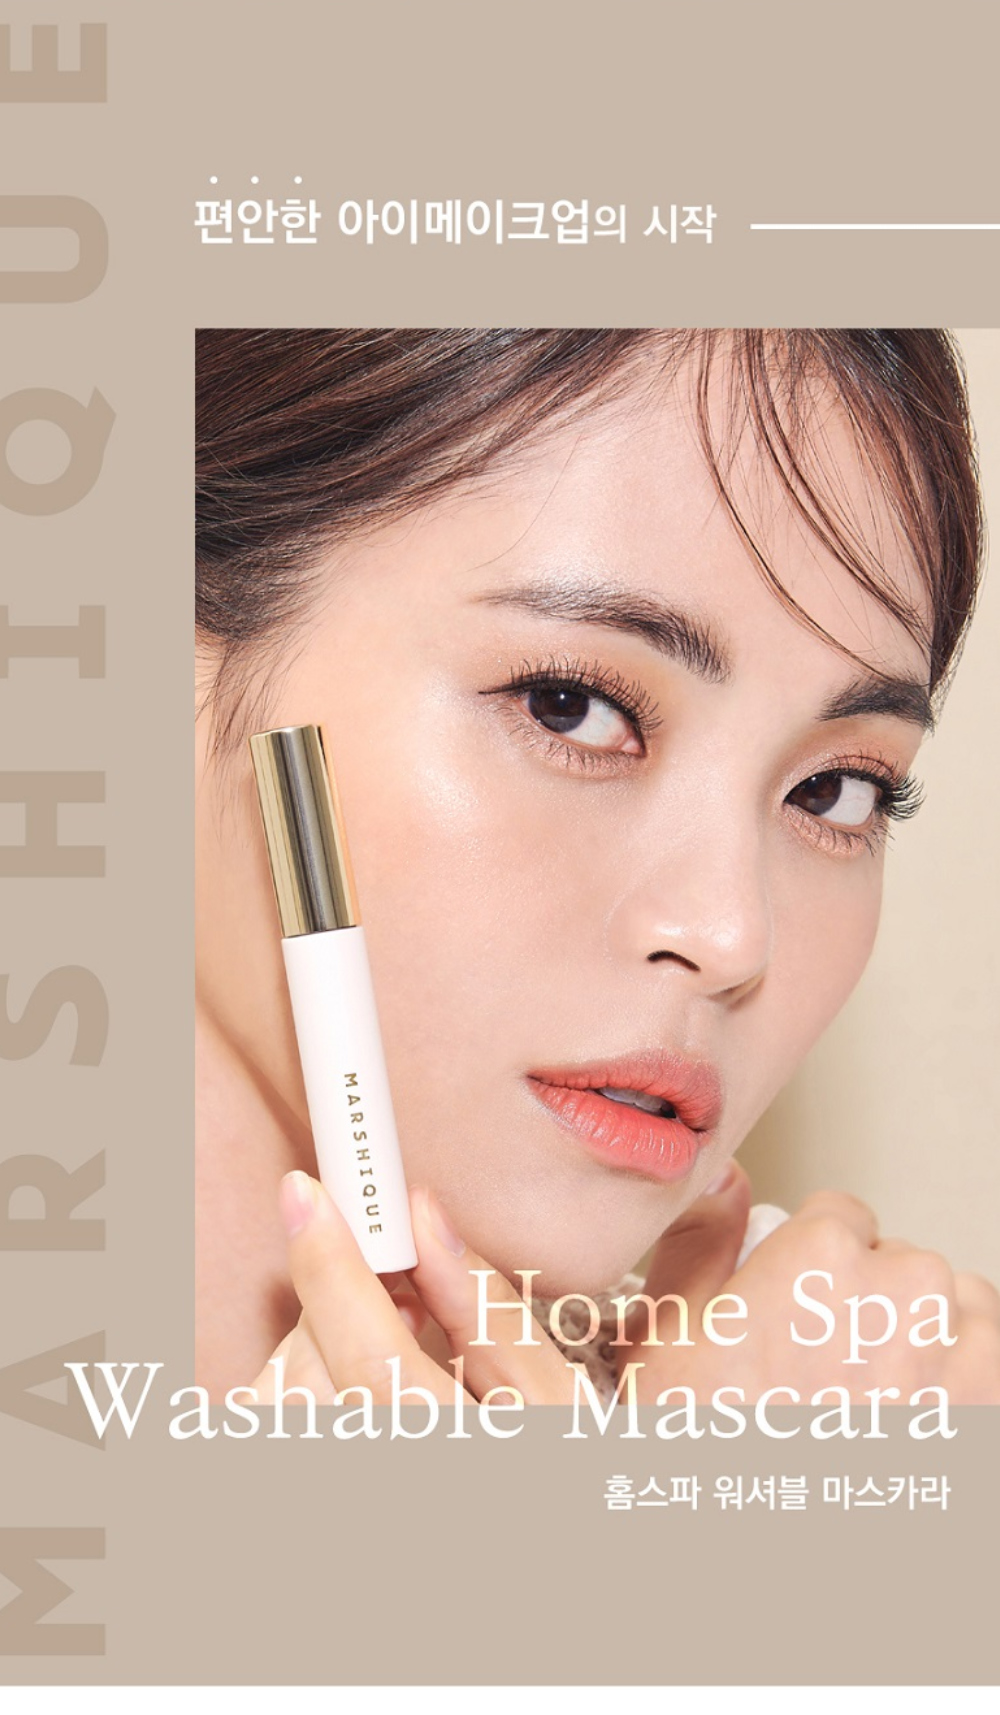 cosmetics product image-S71L11